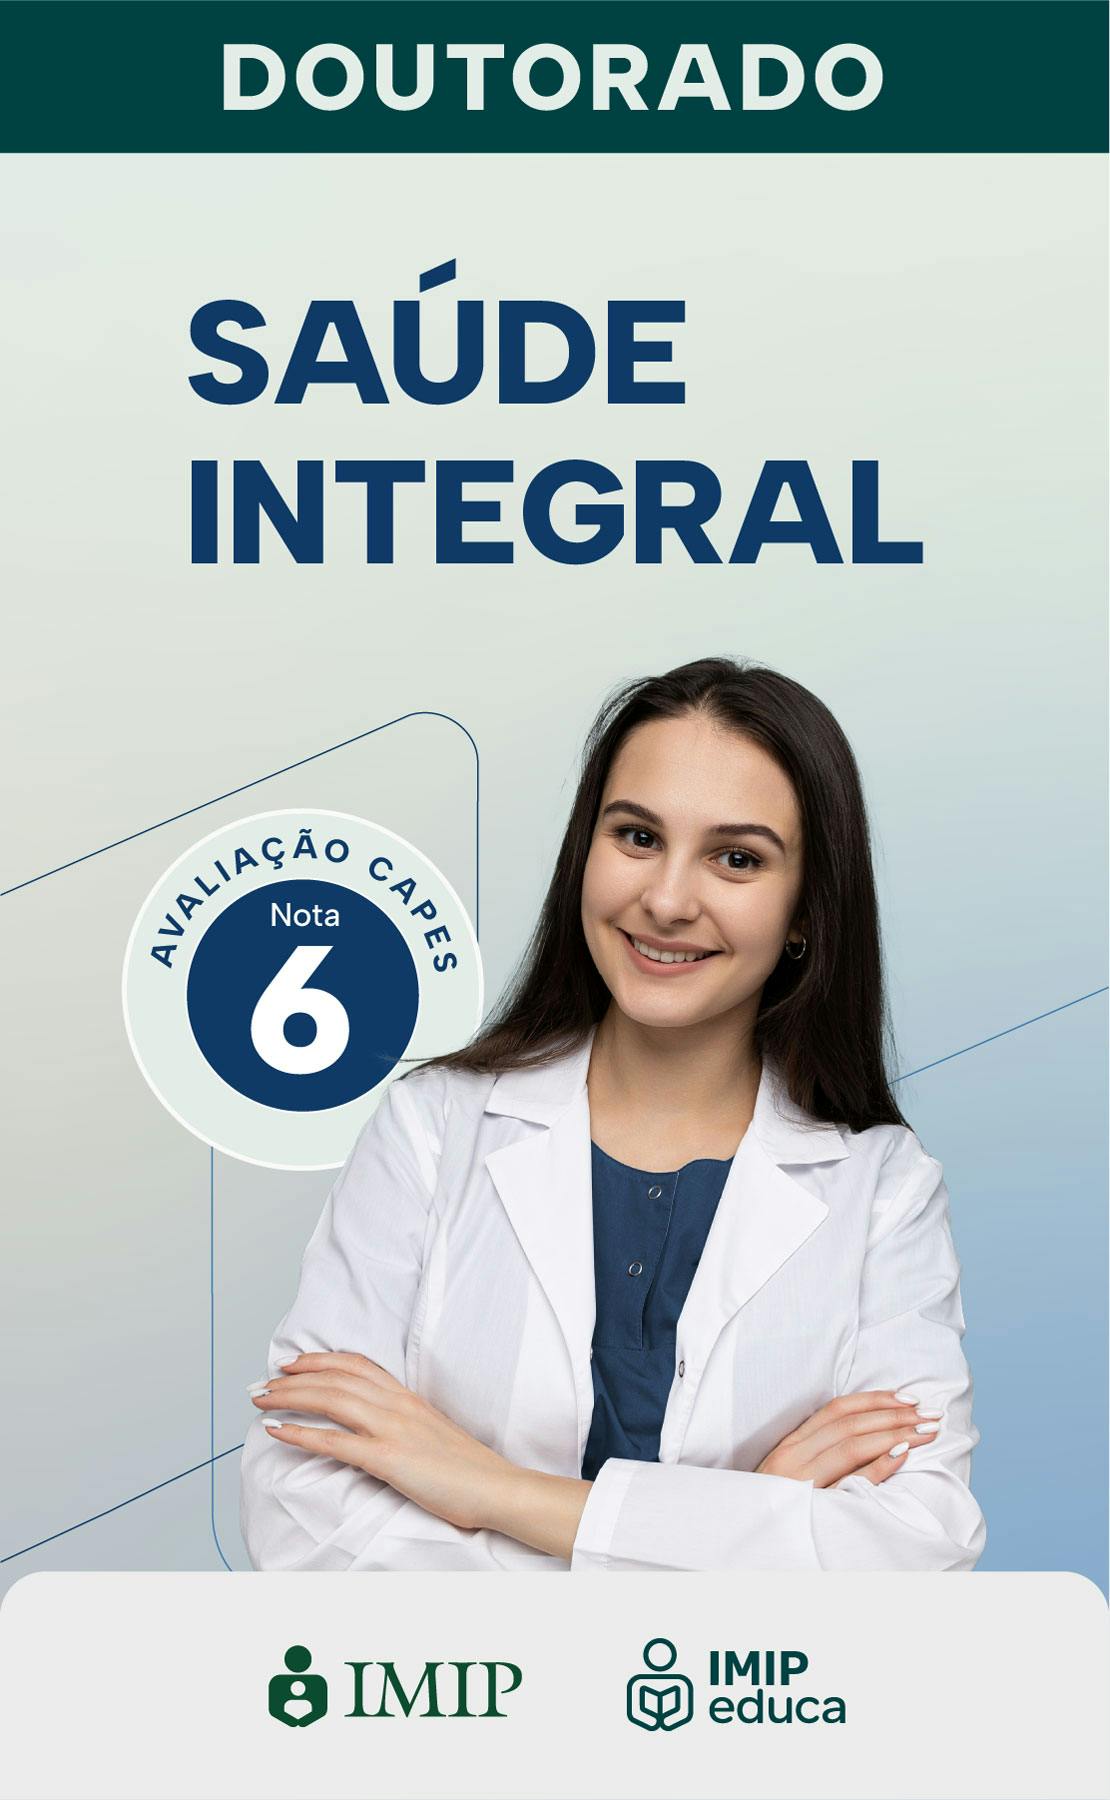 Doutorado Saúde Integral